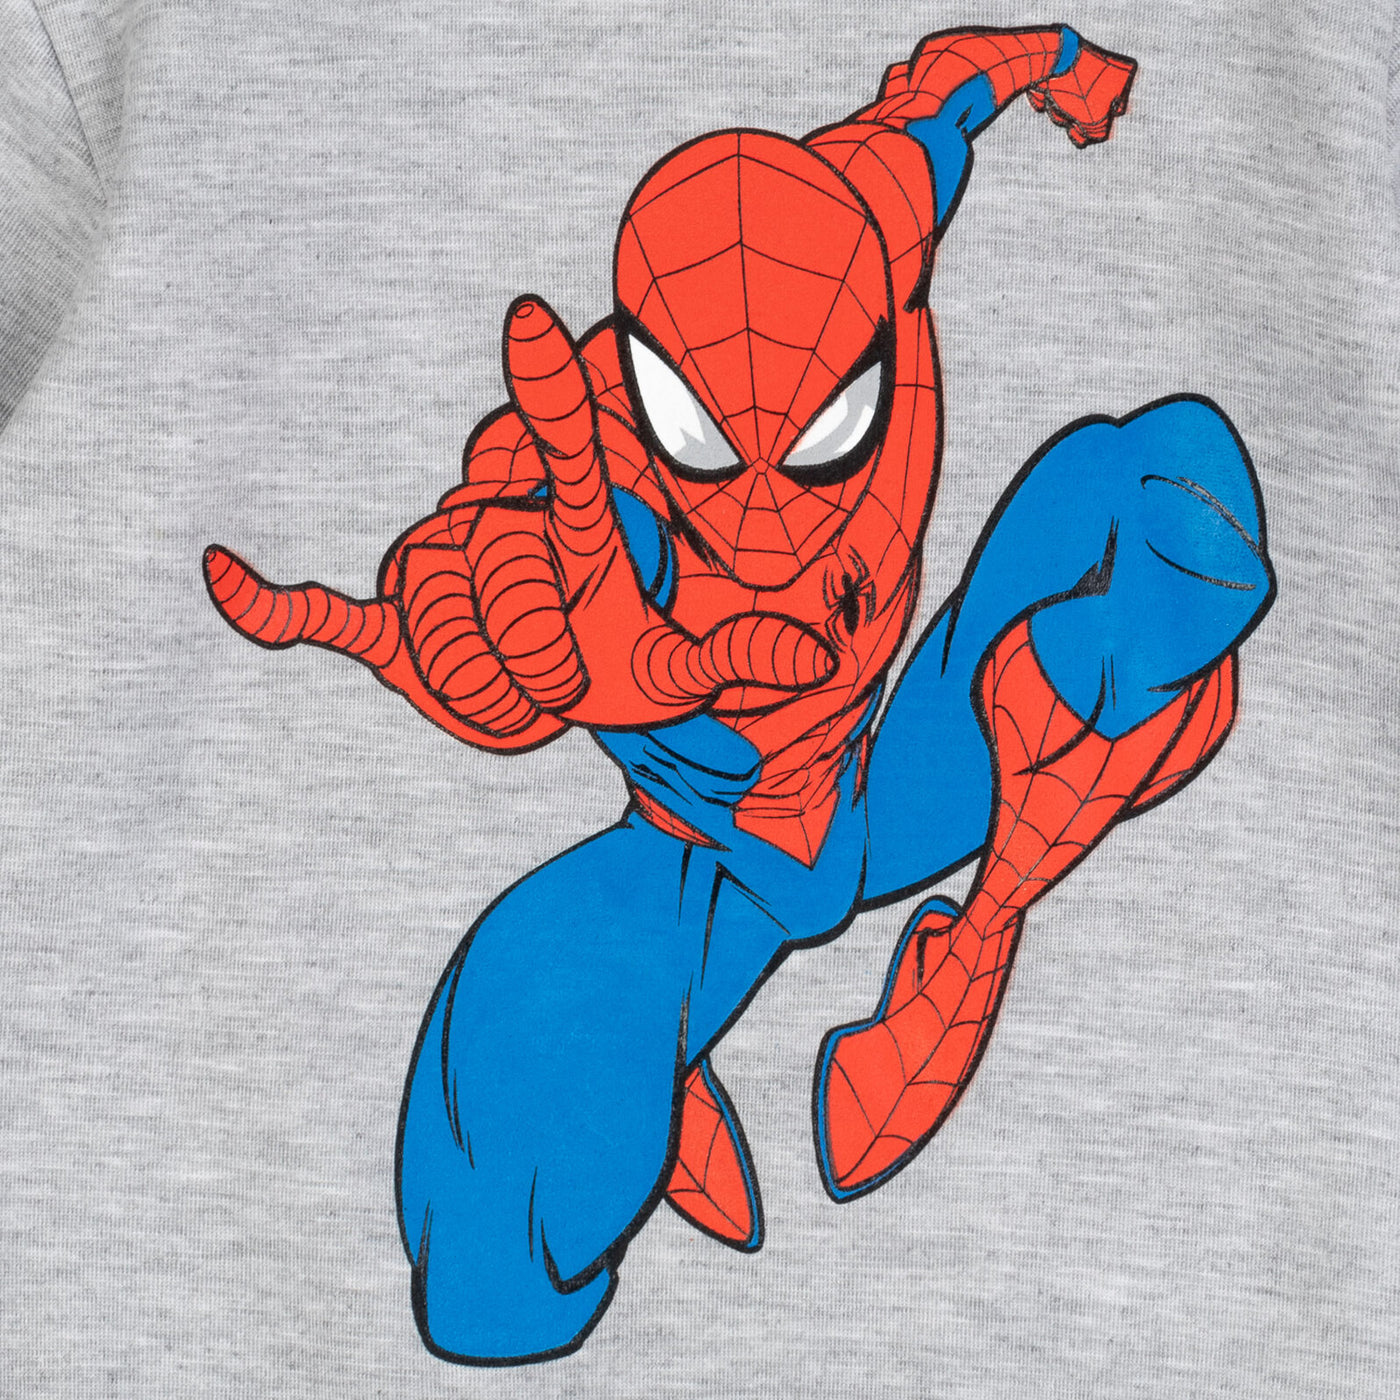 Marvel Spider-Man Pullover Sweatshirt & Jogger Pants